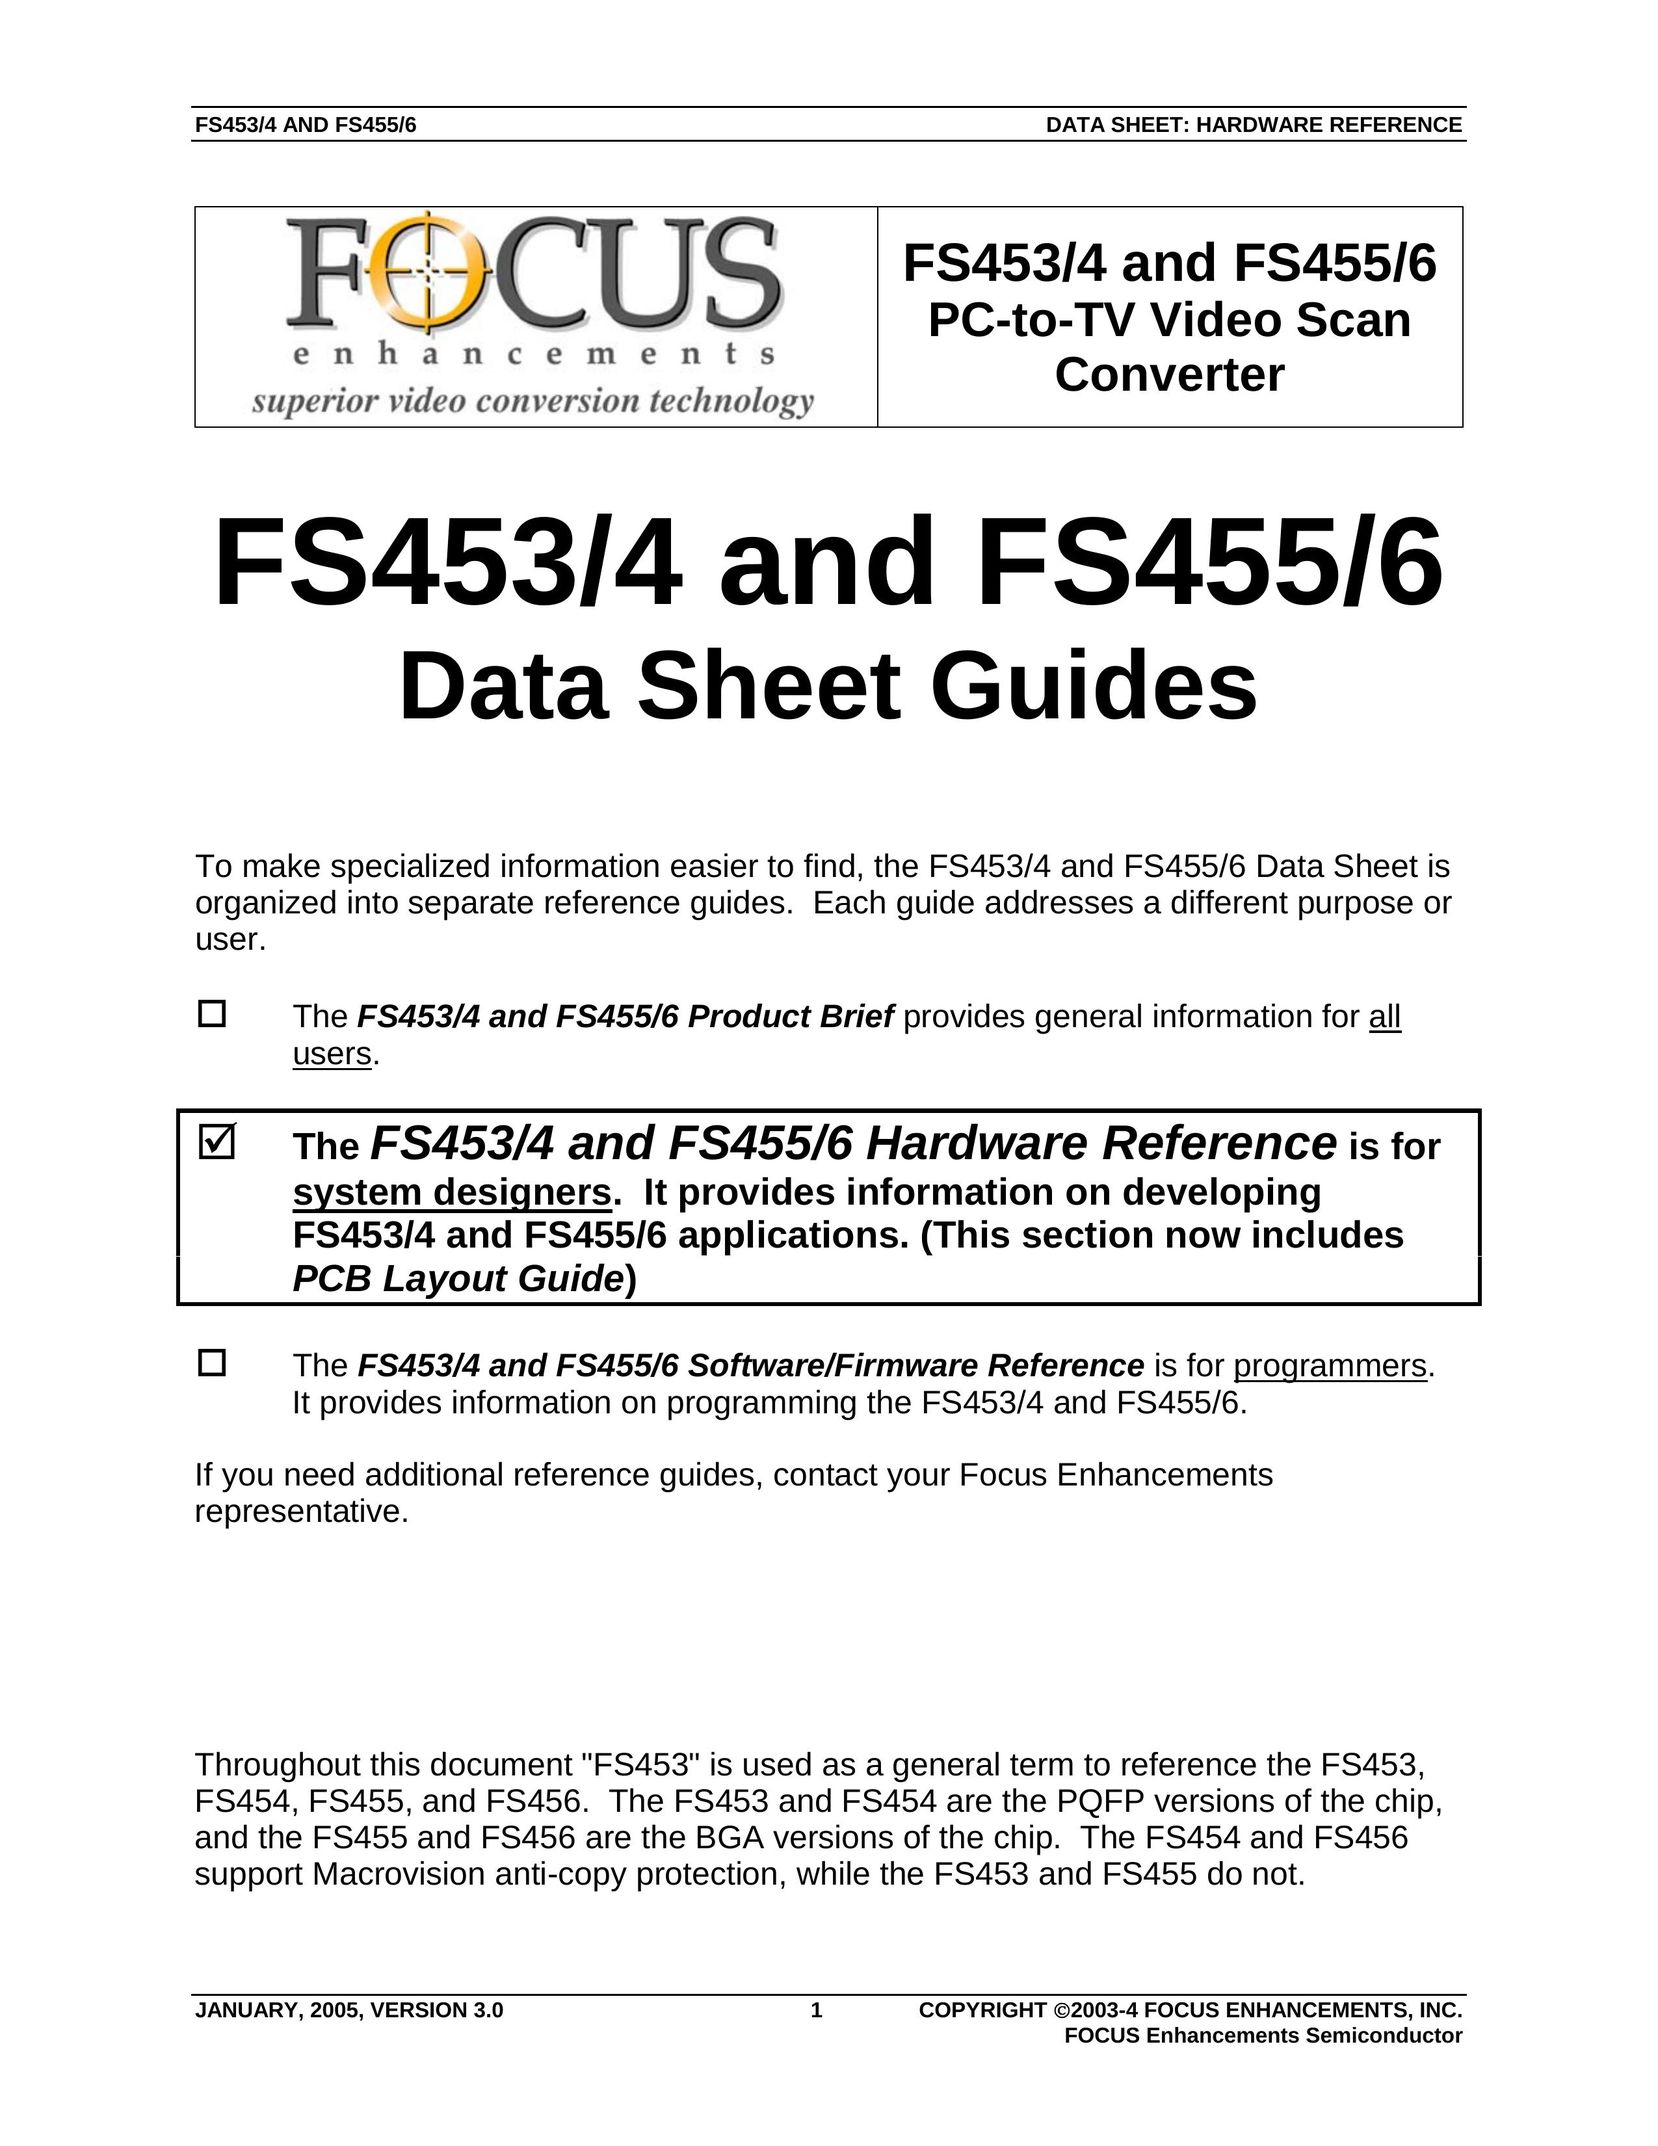 FOCUS Enhancements FS456 Network Router User Manual